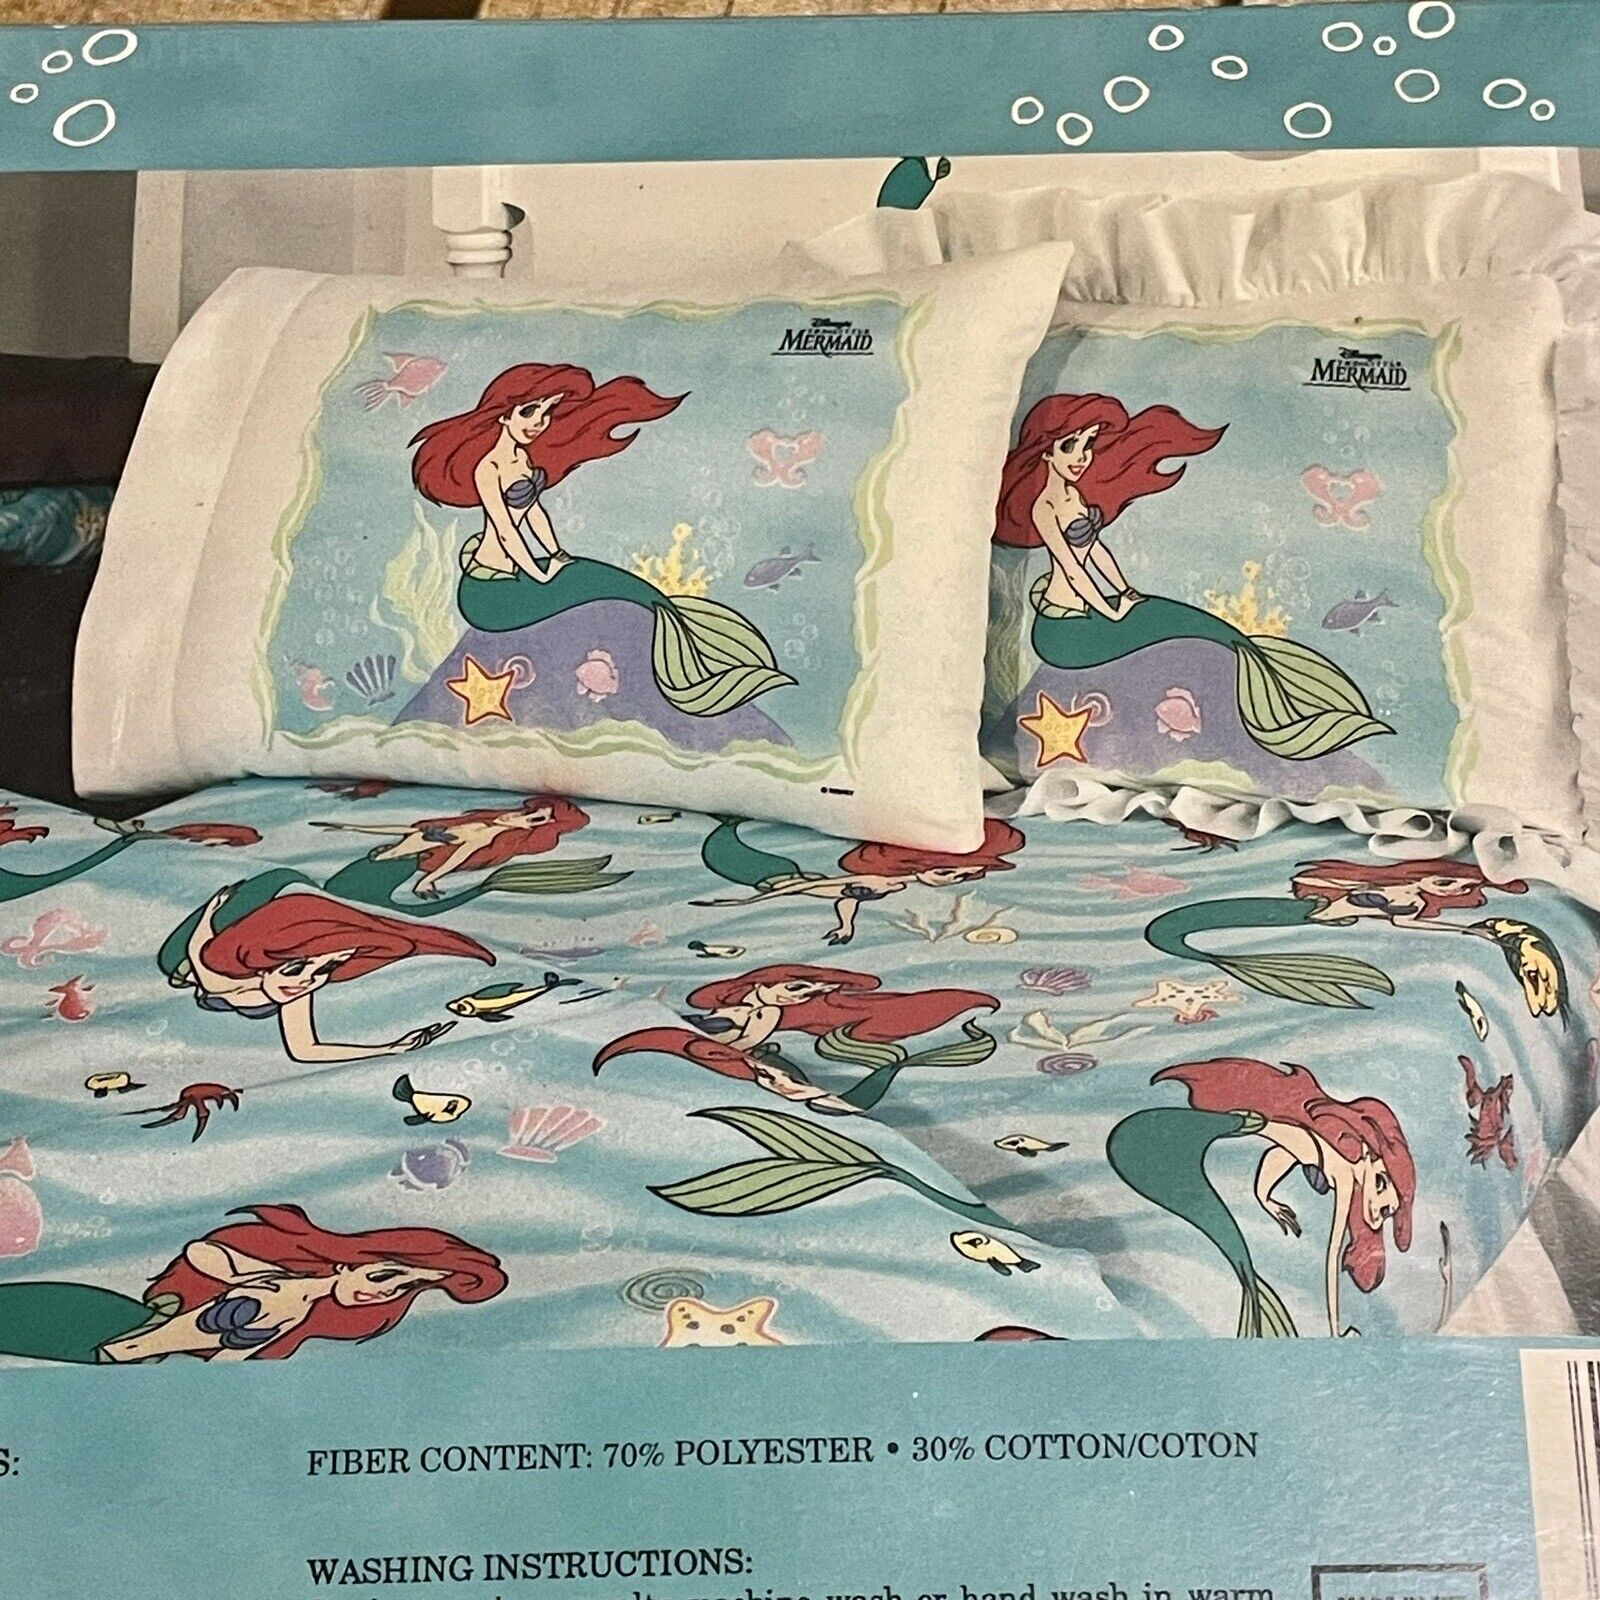 NEW VTG 90’s THE LITTLE MERMAID TWIN Sheets Set, Pillowcase Disney RARE USA MADE